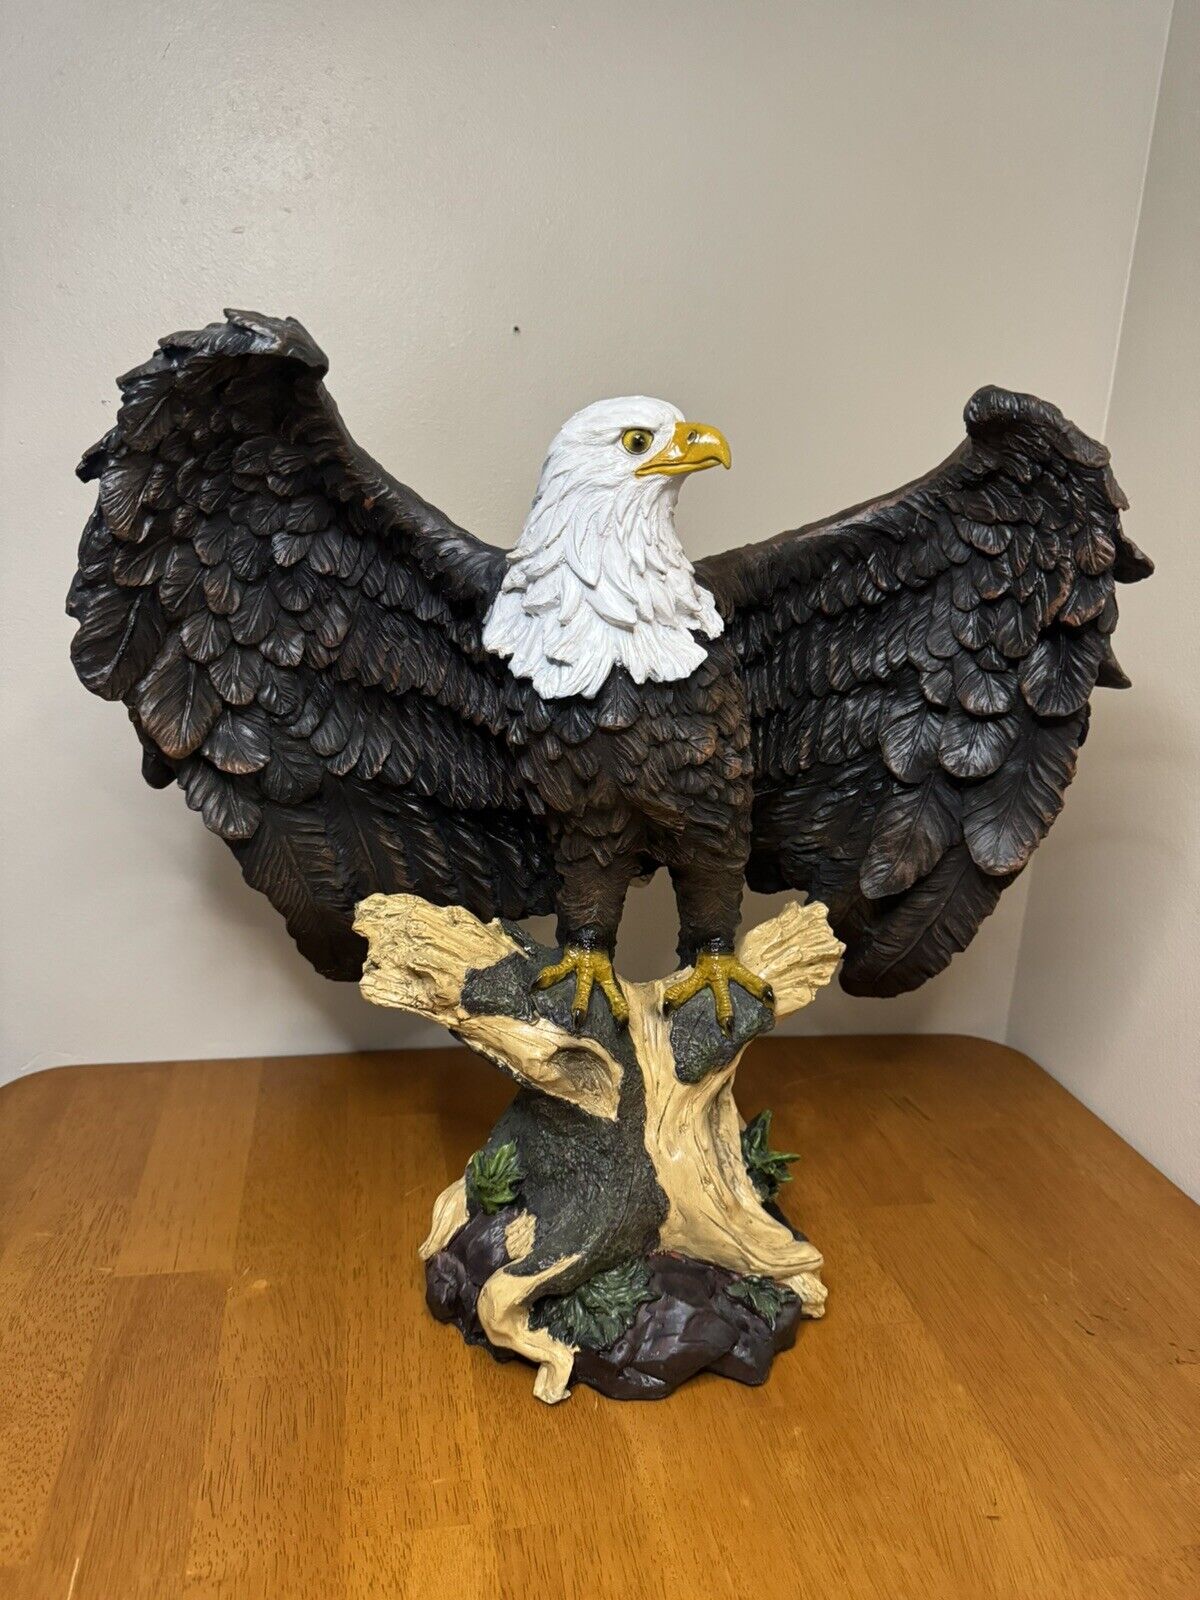 Bald Eagle Statue 18” High Perching On Branch Home Garden Figurine Composite